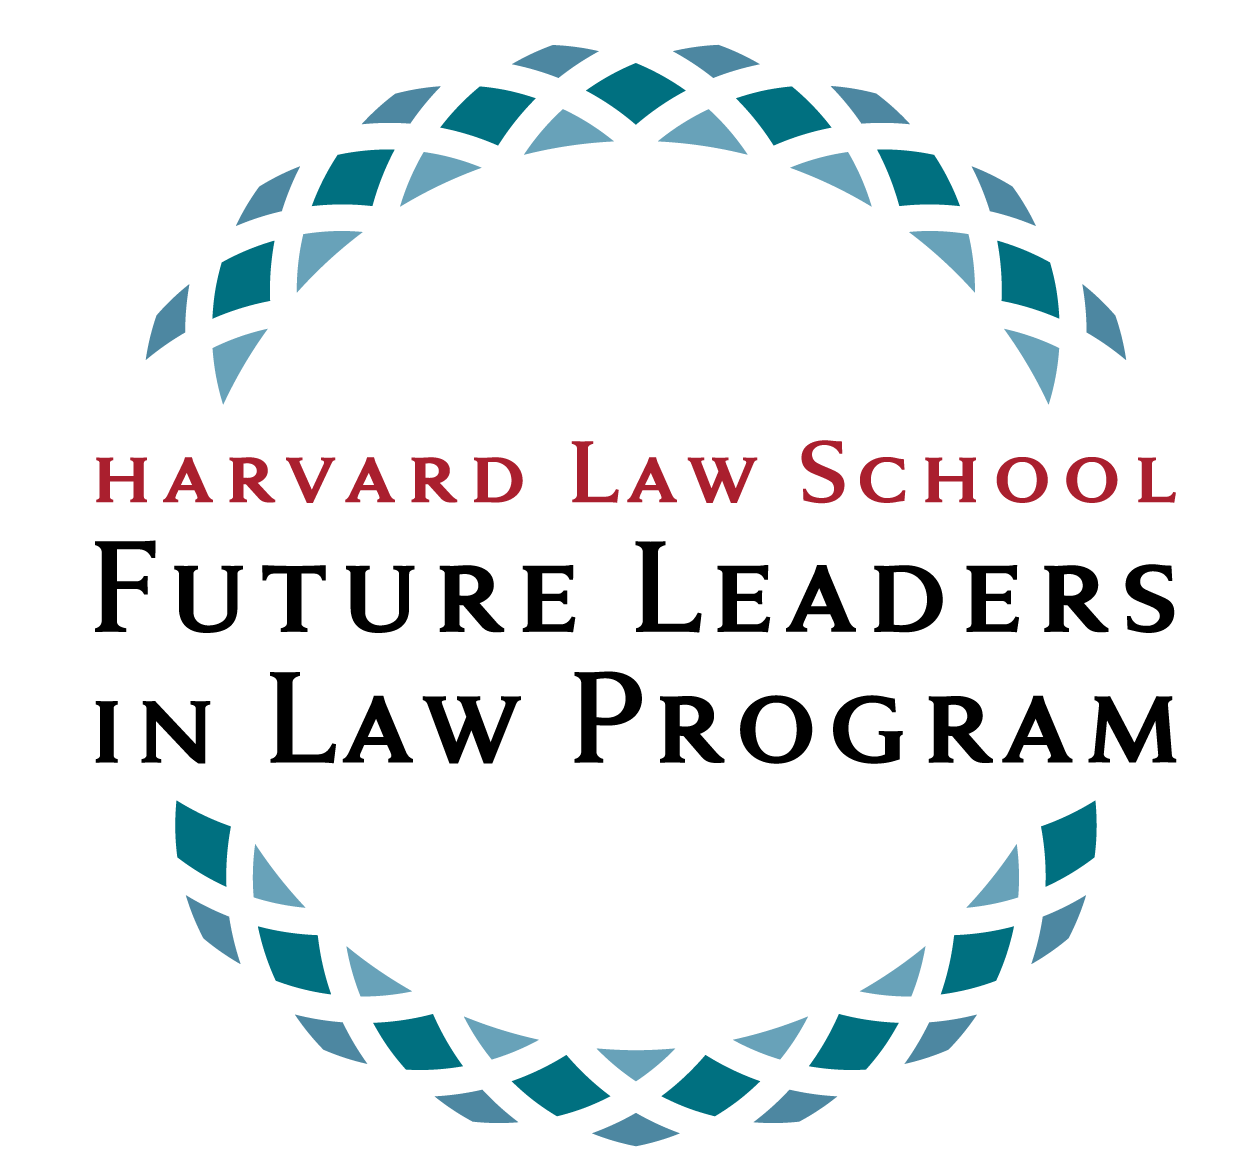 Harvard Law School Future Leaders in Law Program